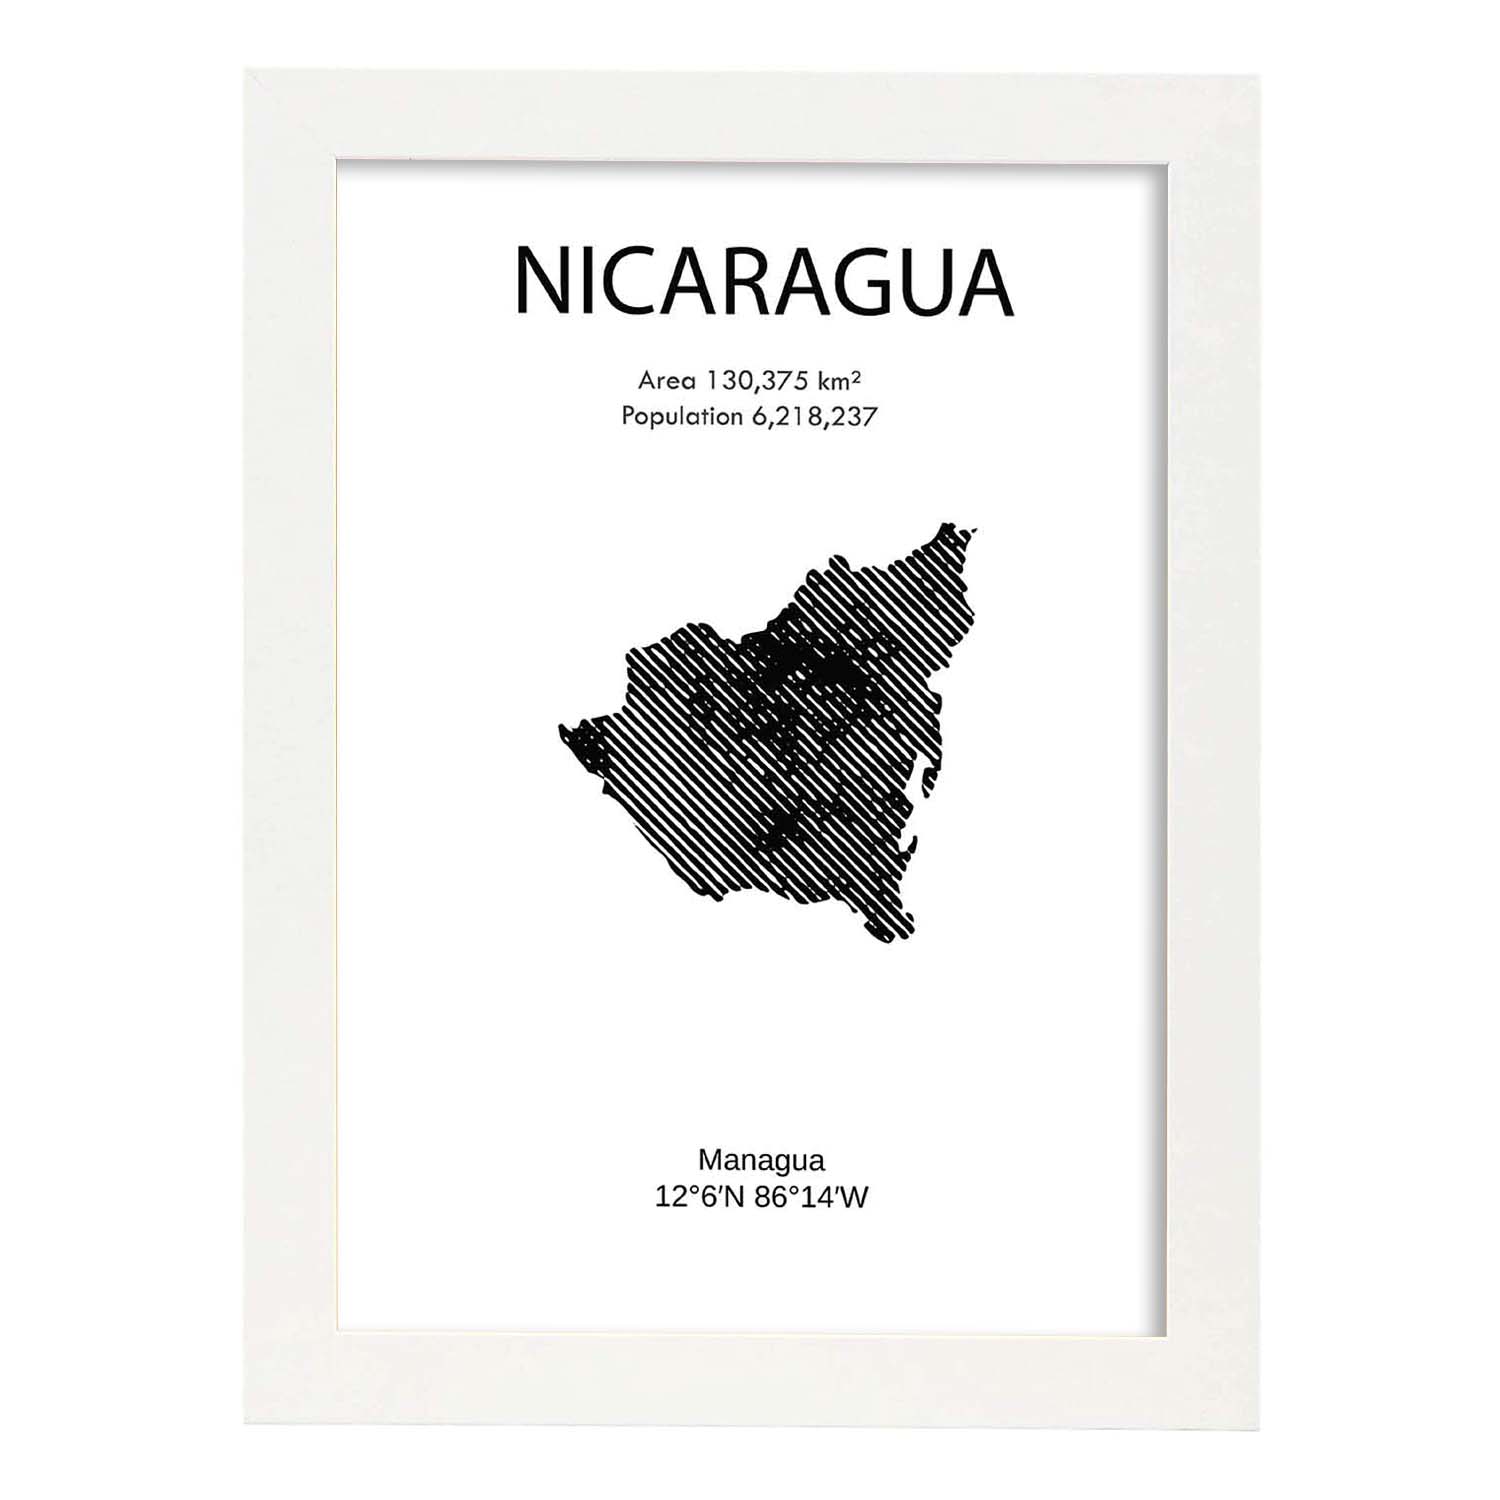 Poster de Nicaragua. Láminas de paises y continentes del mundo.-Artwork-Nacnic-A3-Marco Blanco-Nacnic Estudio SL